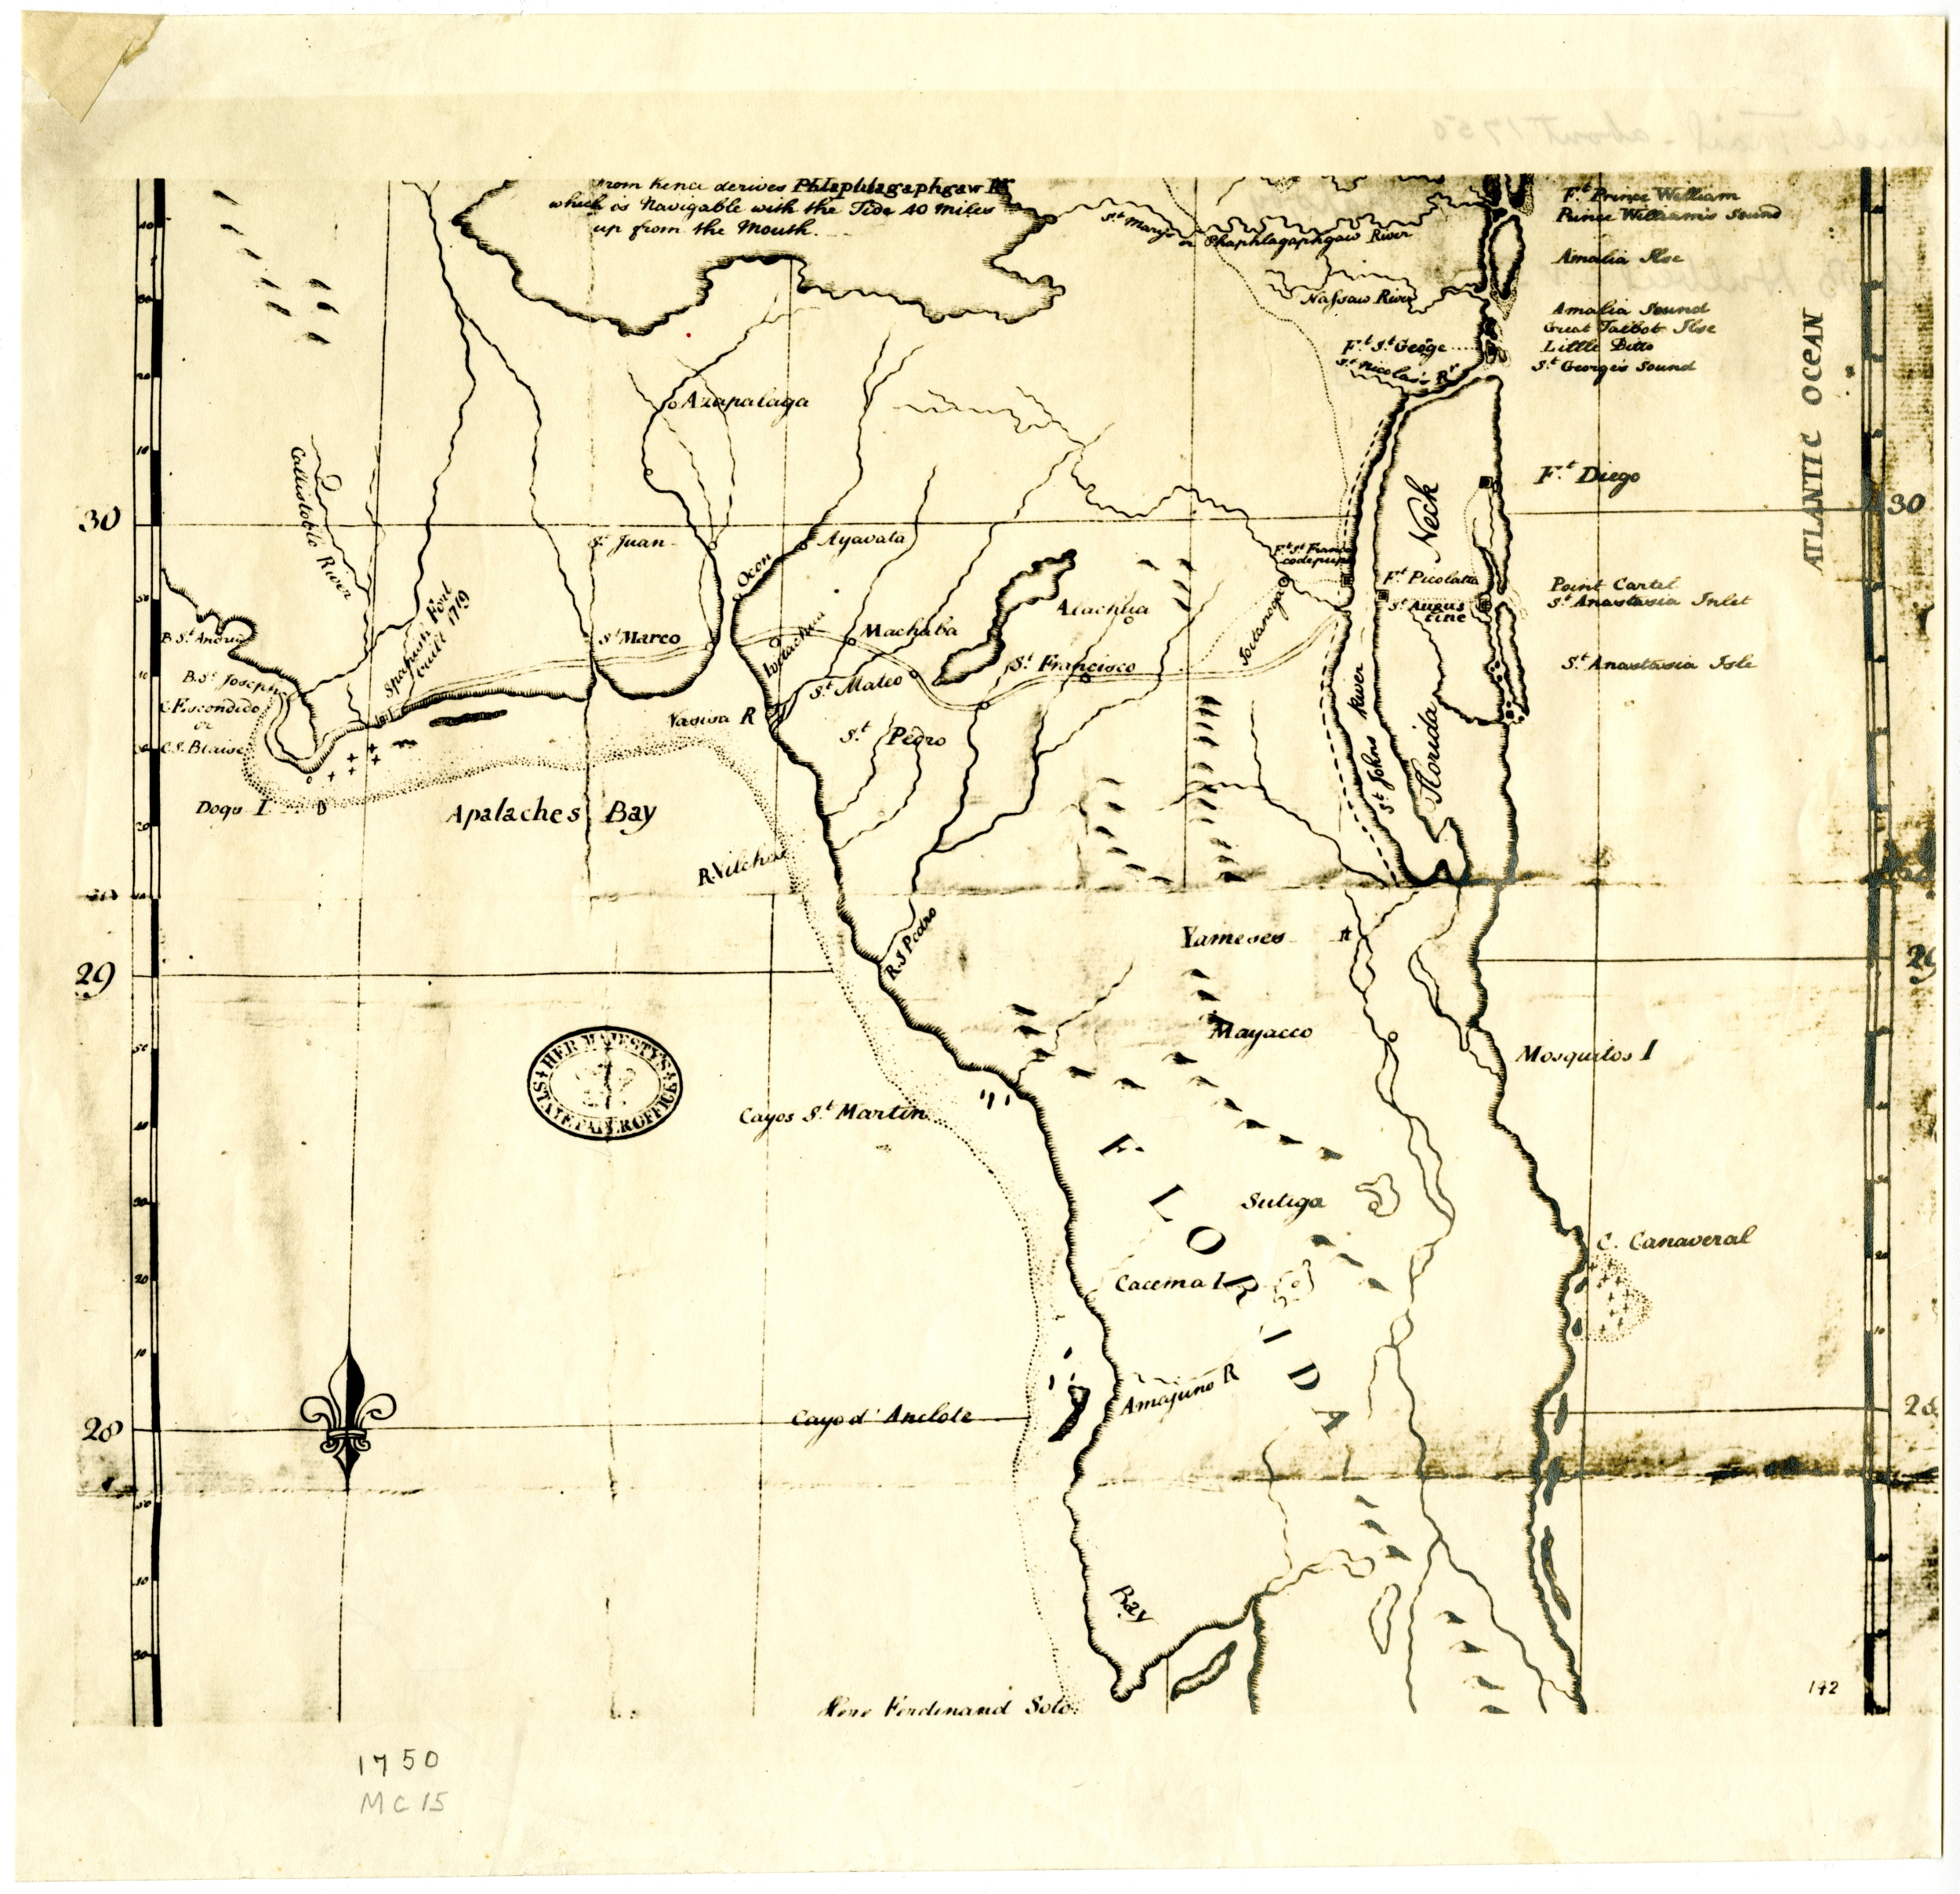 Spanish Trail Map of Florida, 1750